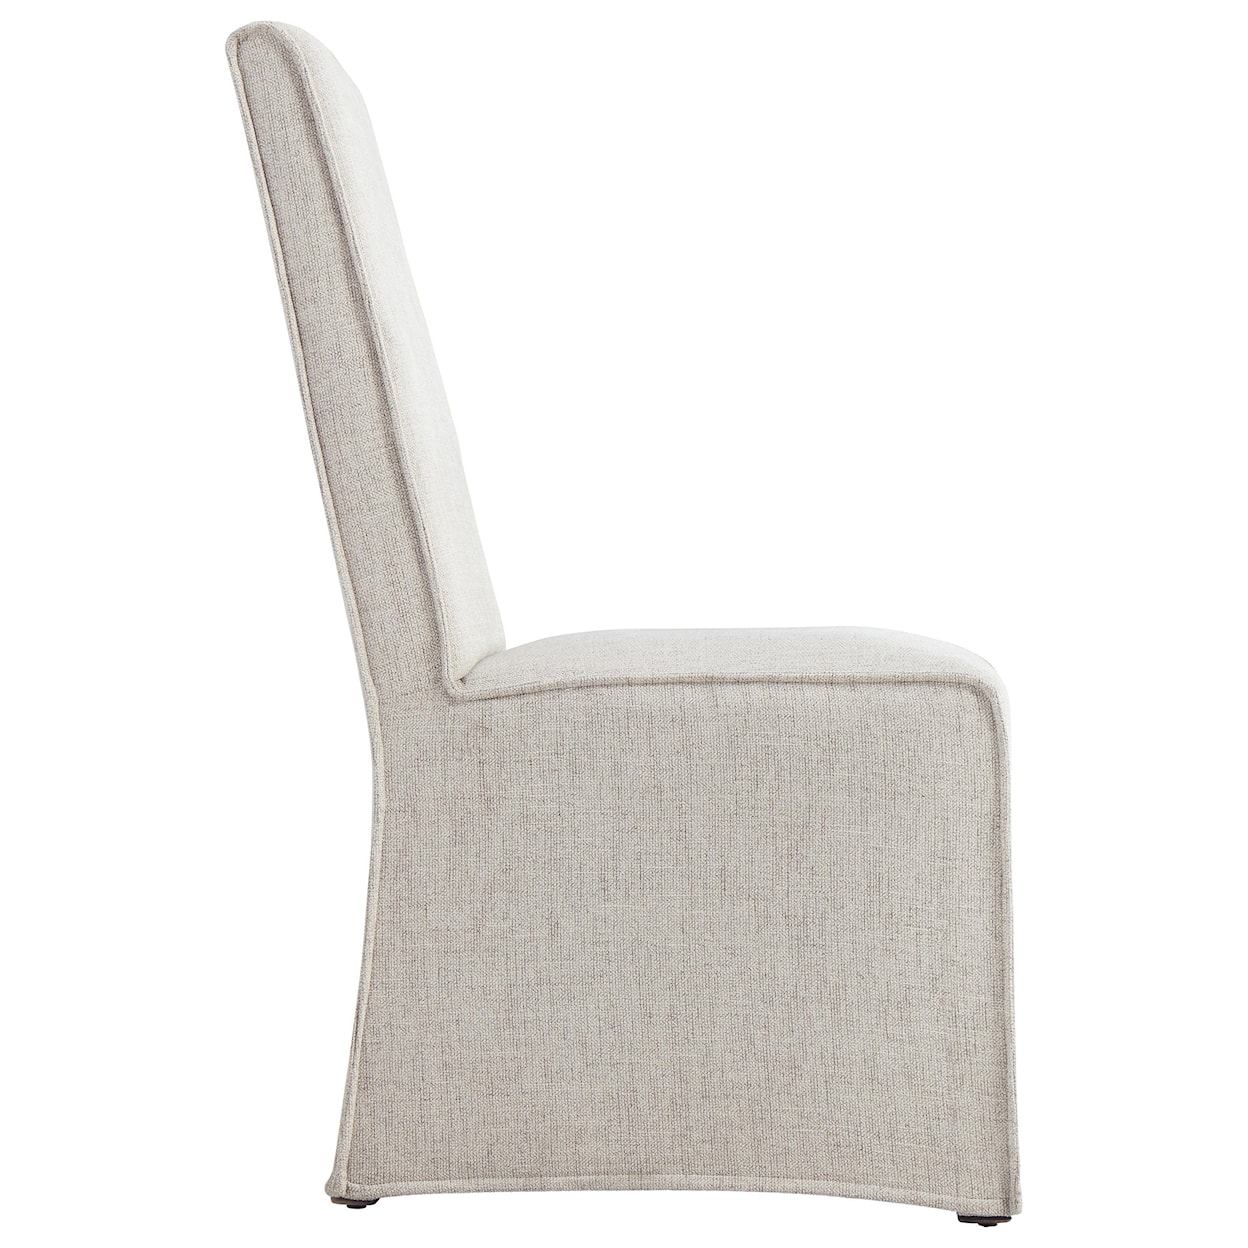 Millennium Langford Upholstered Skirted Side Chair